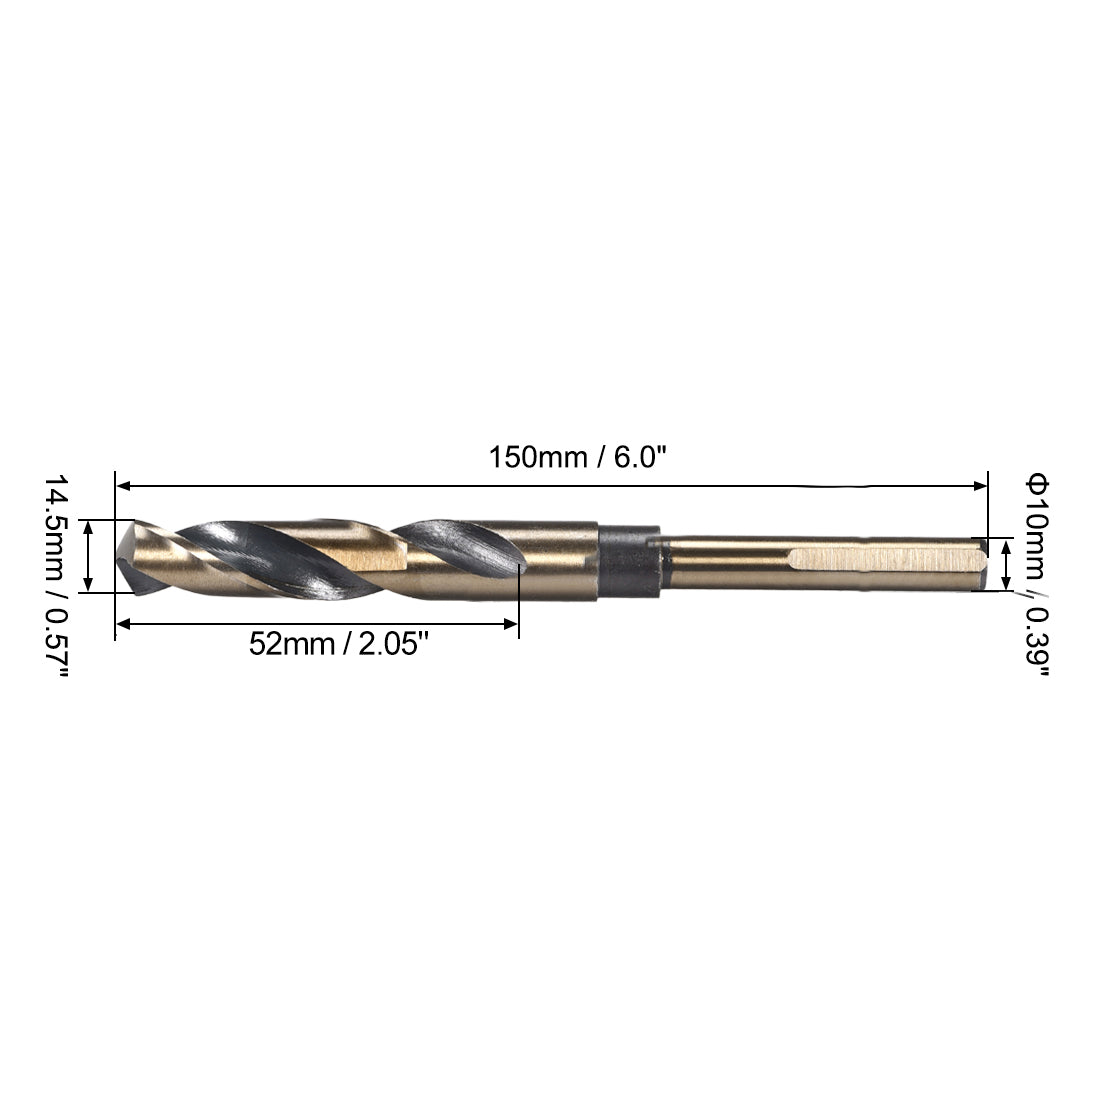 uxcell Uxcell Reduced Shank Twist Drill Bits HSS 4341